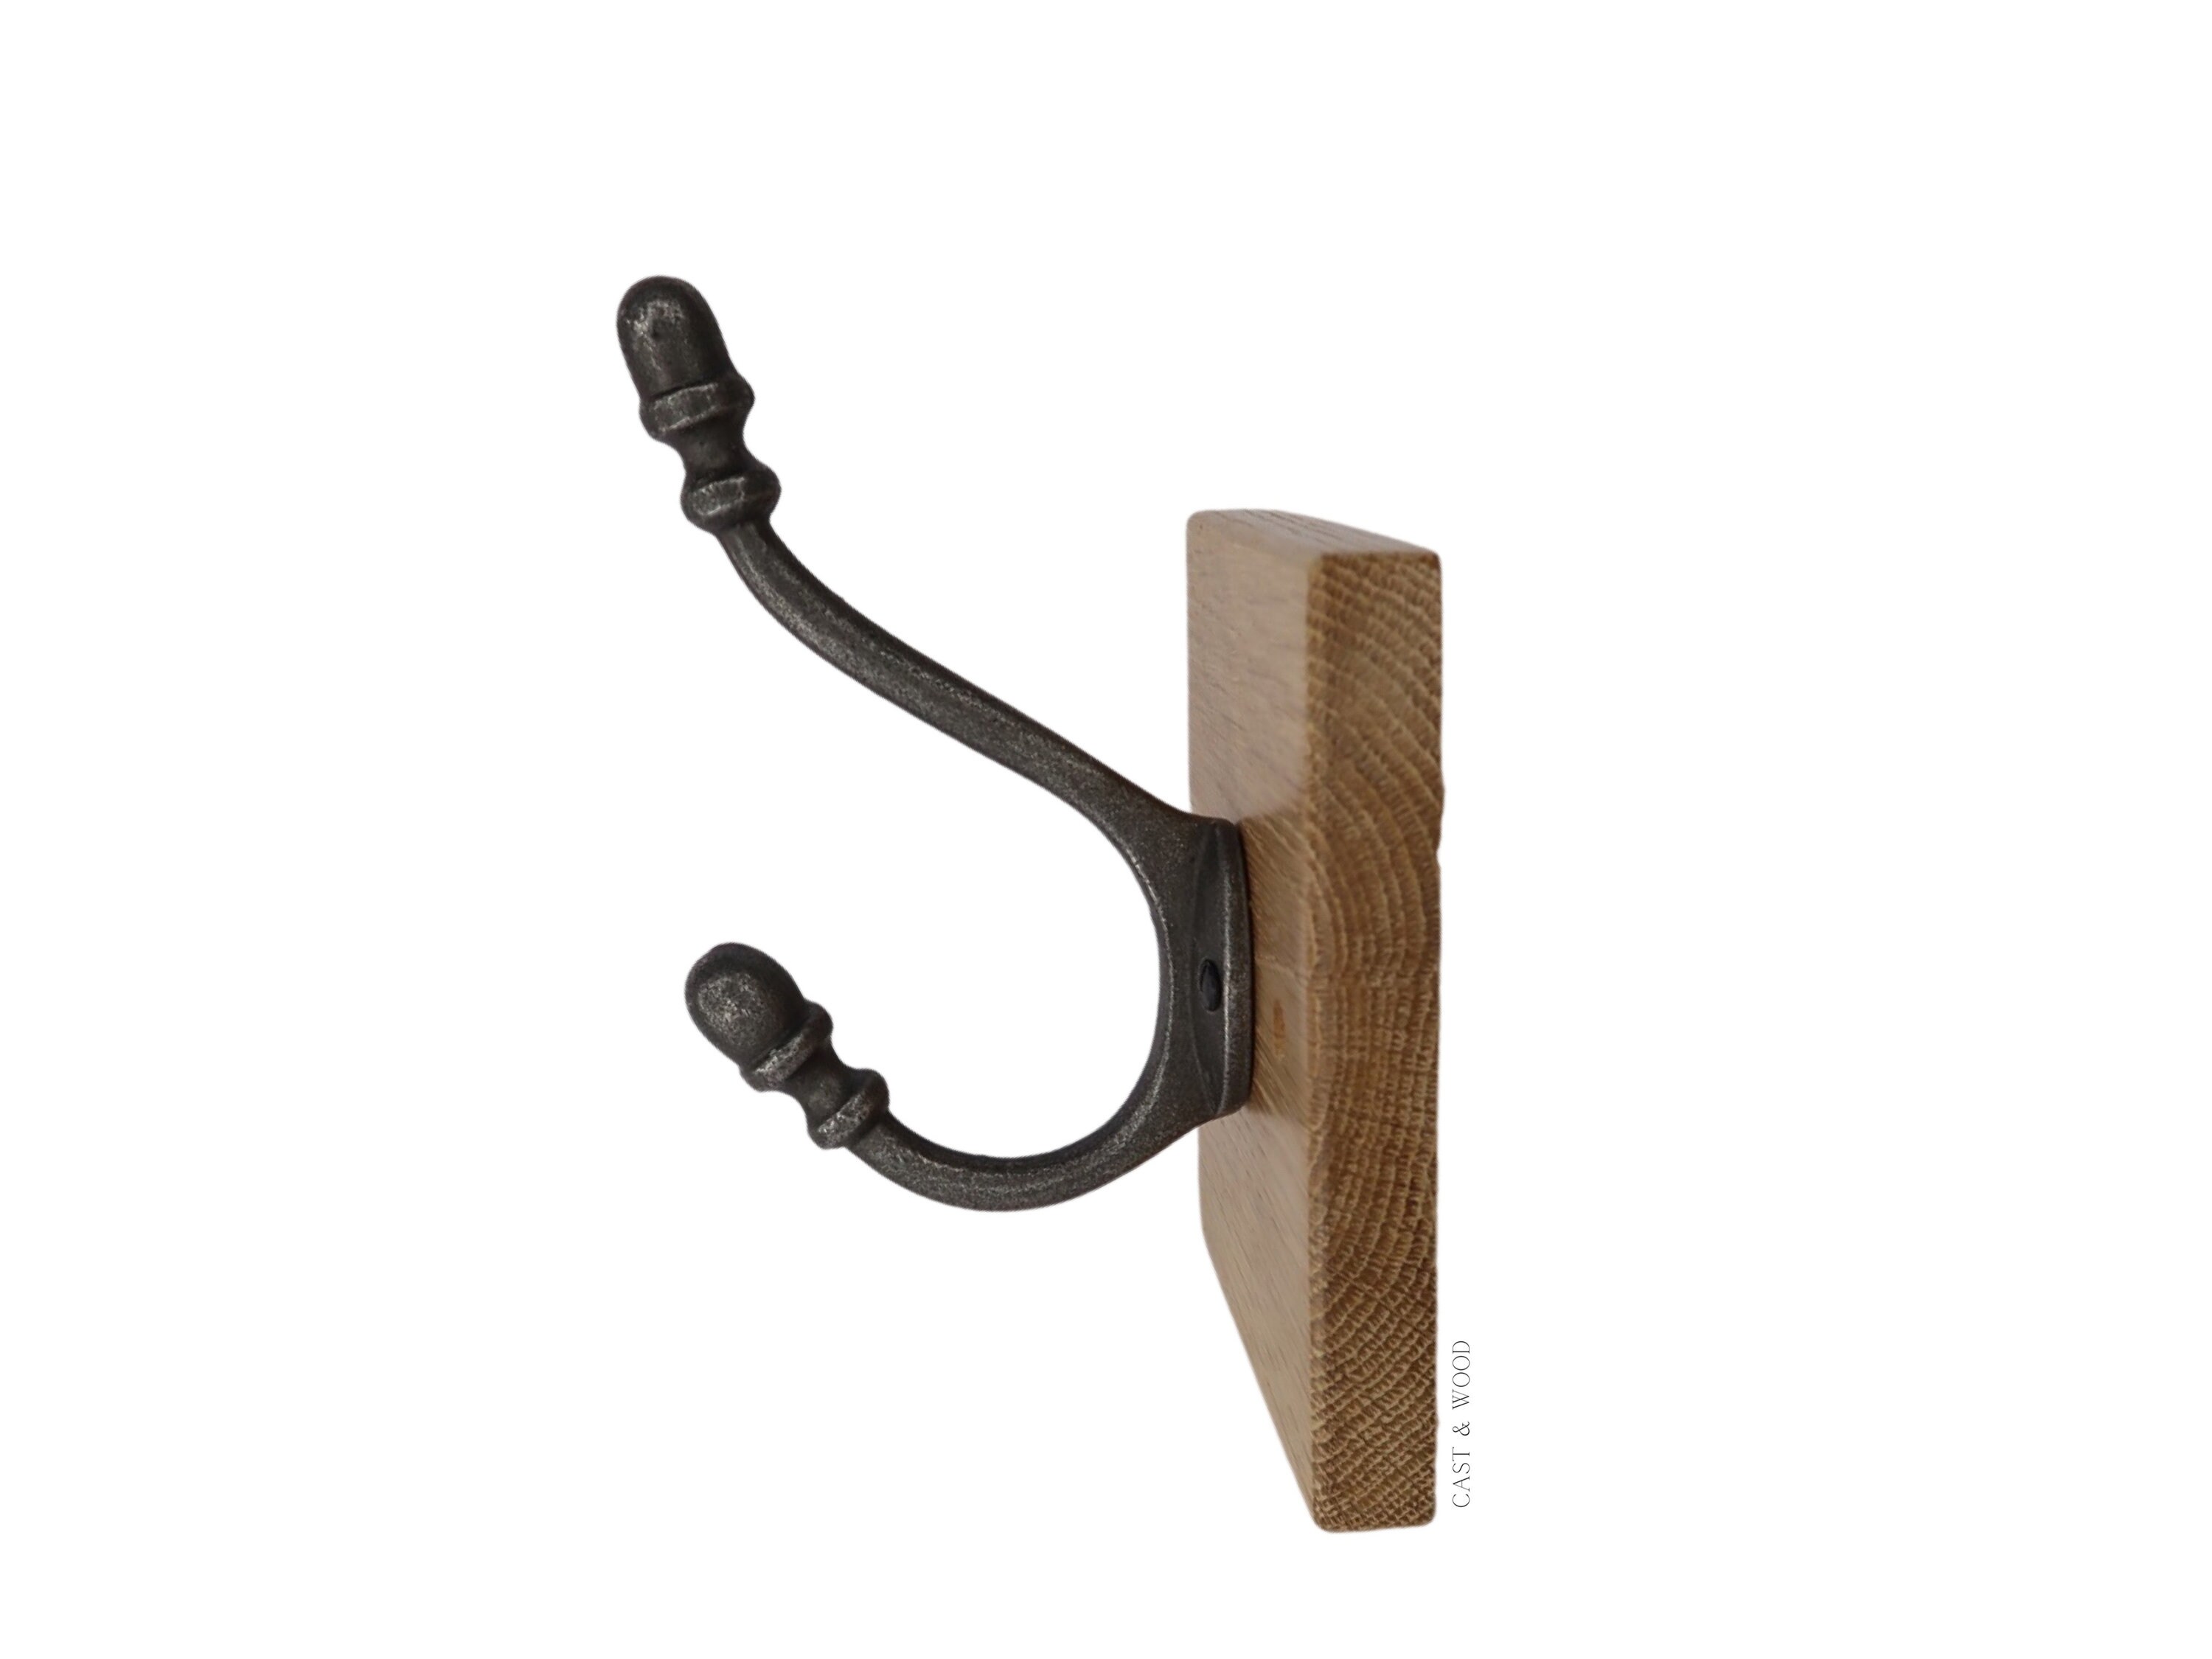 Coat Rack solid oak vintage retro style cast iron coat hooks handmade –  Niche Emporium